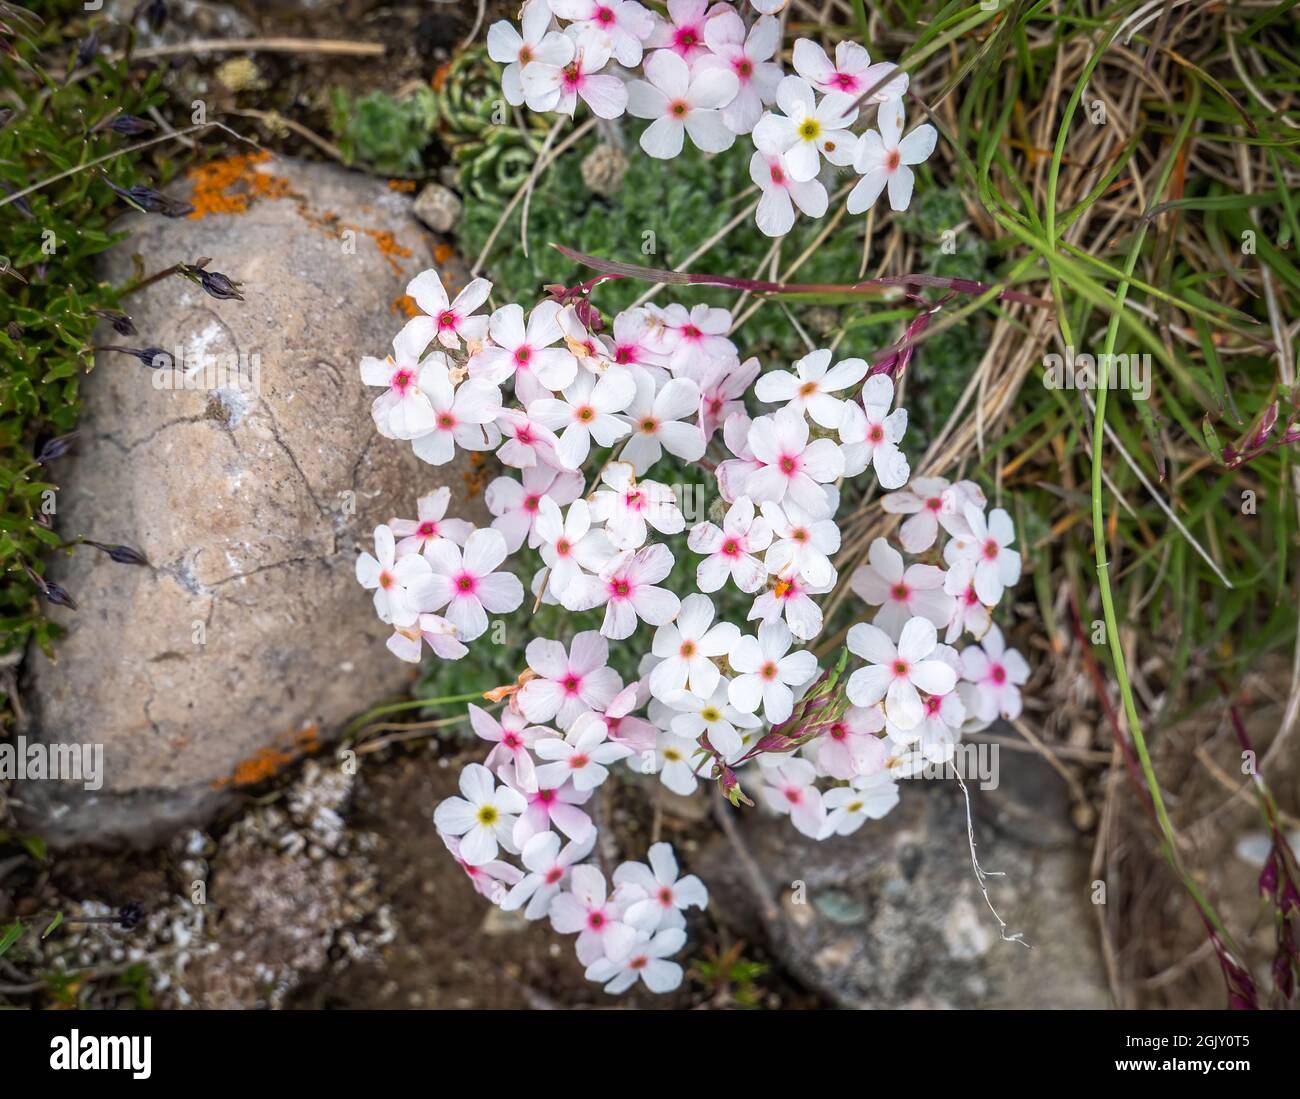 Spreading phlox (Phlox diffusa) small flowers near a rock in nature. Stock Photo